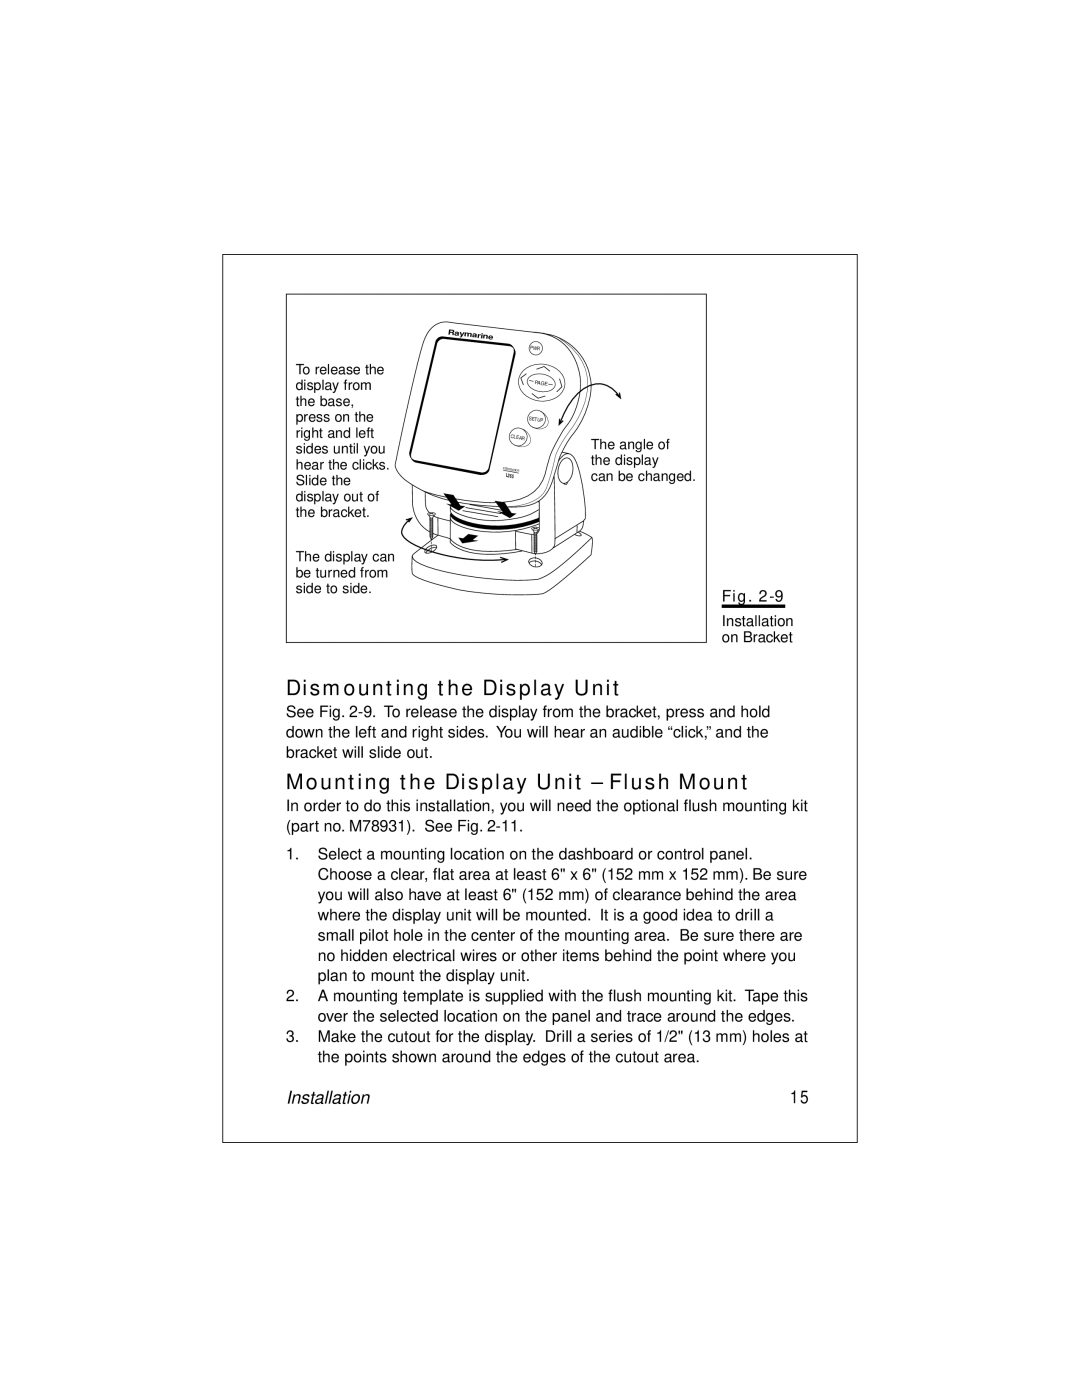 Raymarine L265 manual Dismounting the Display Unit, Mounting the Display Unit Flush Mount 